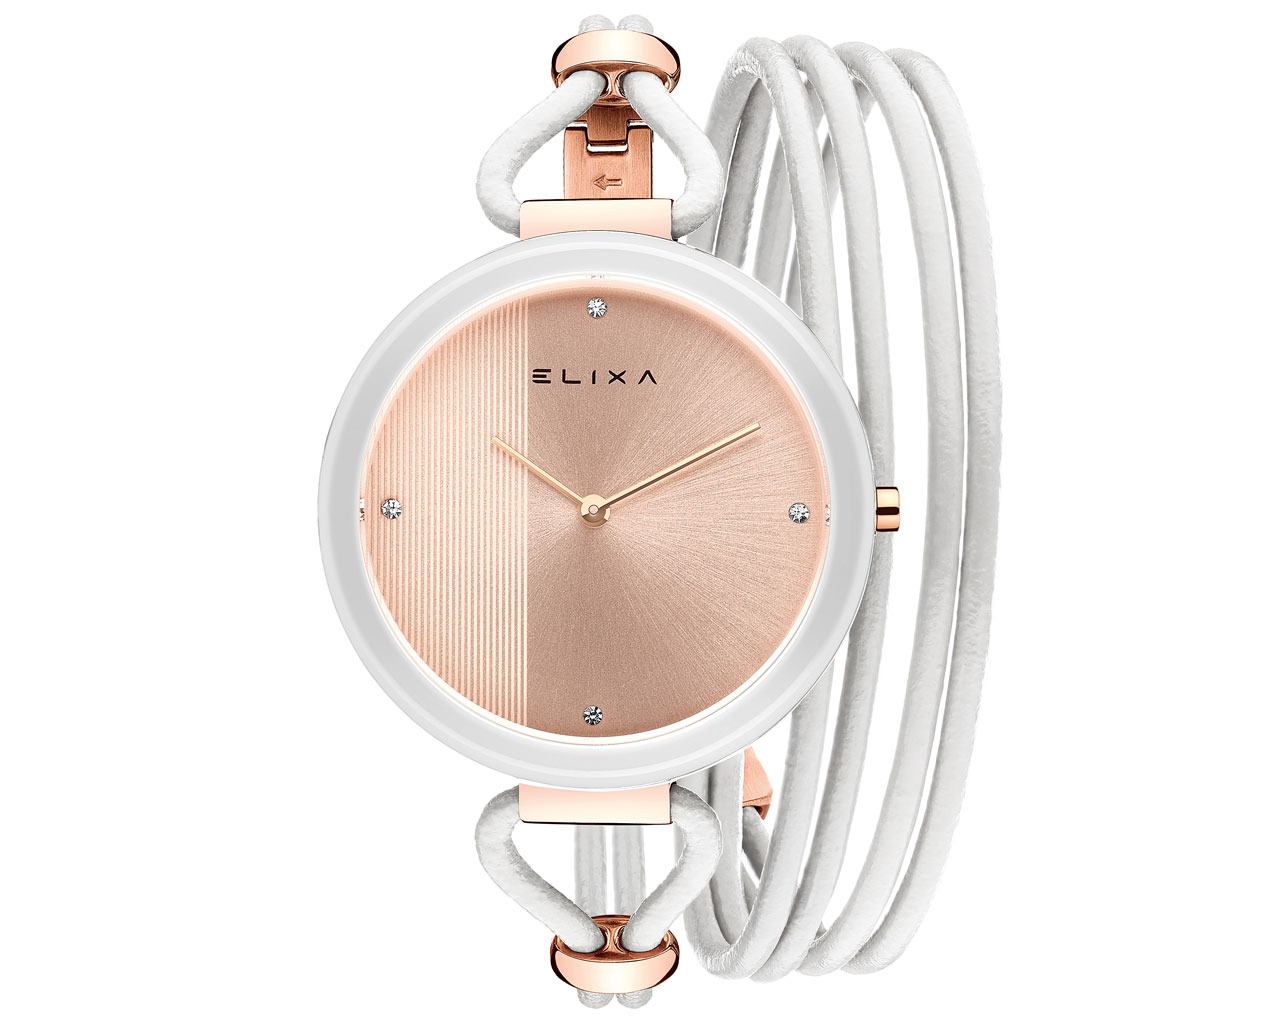 Đồng hồ Elixa E135-L580